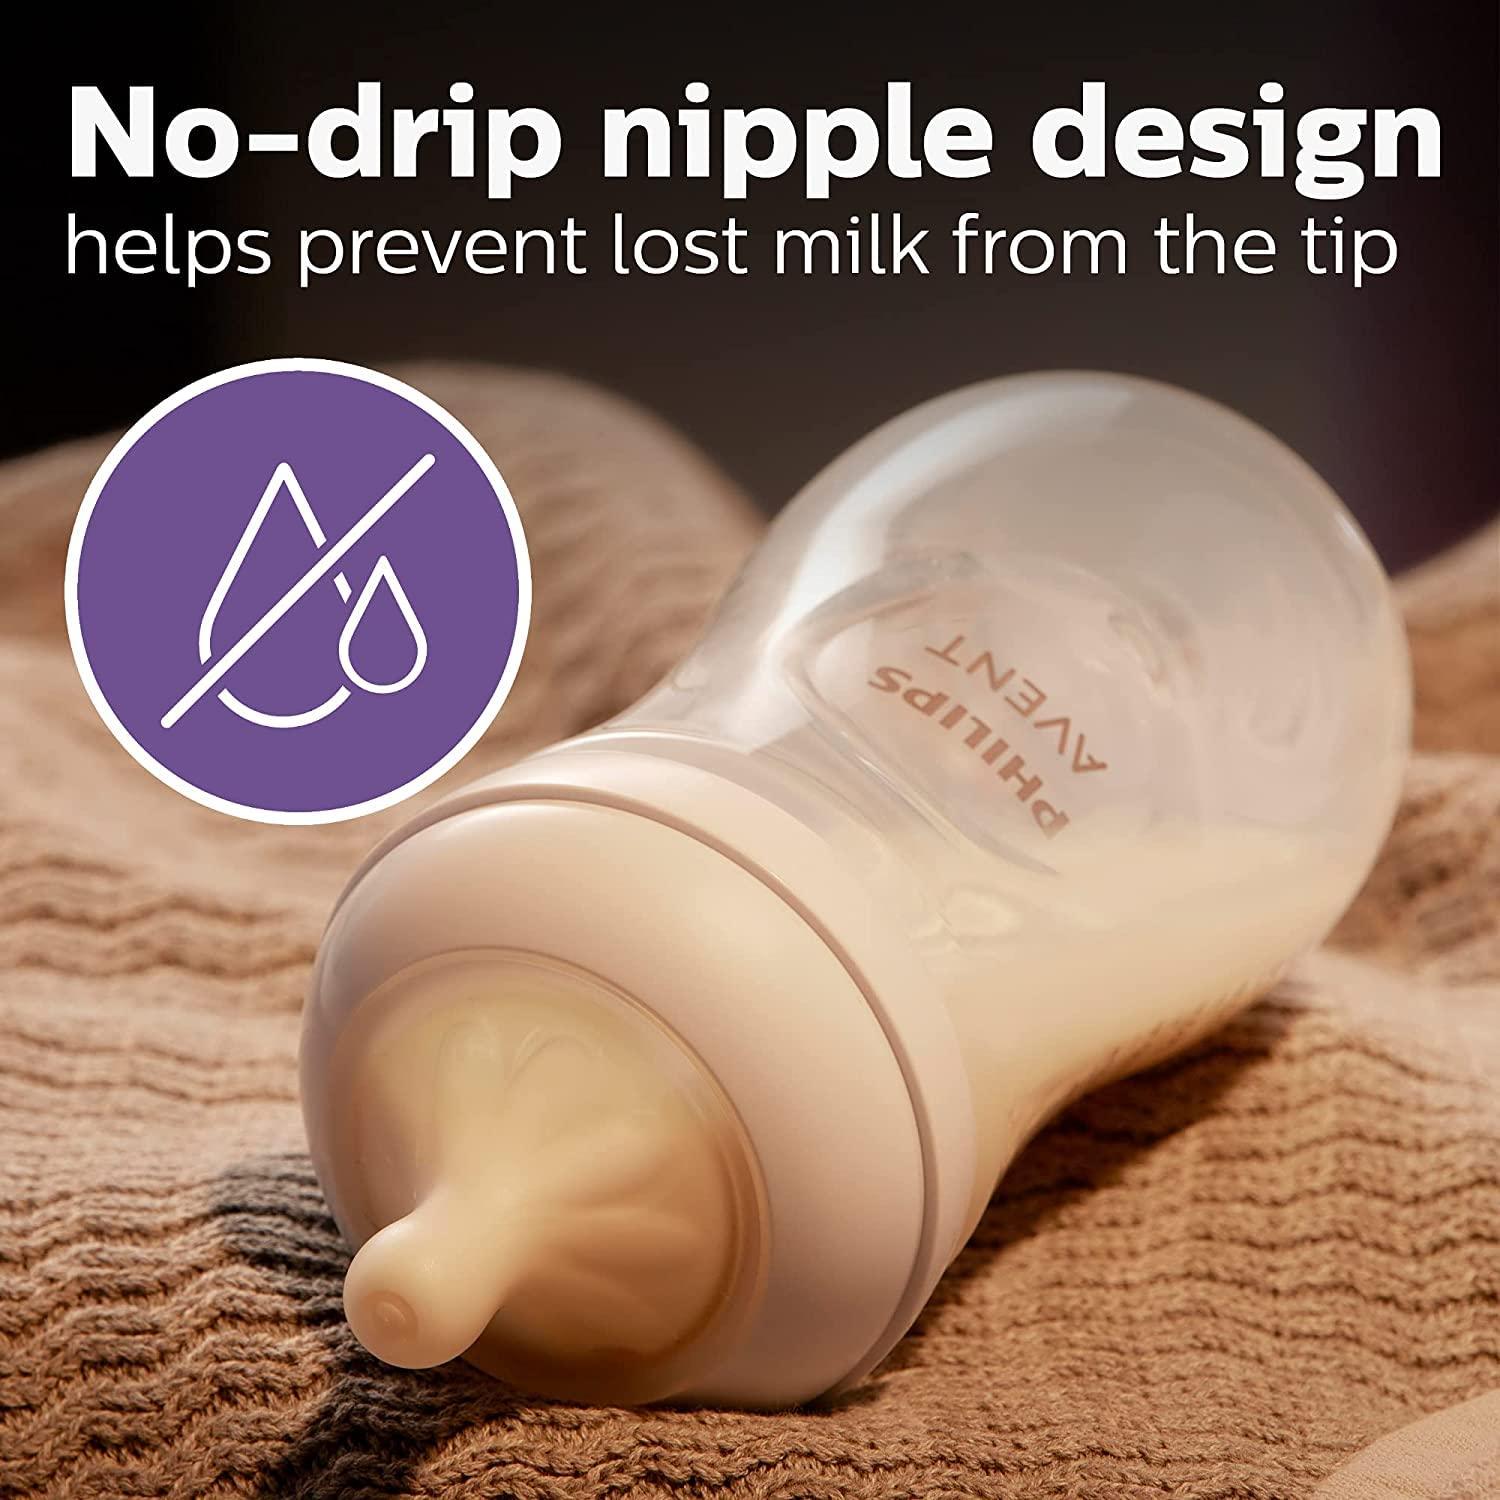 Avent Natural Newborn Flow Nipples, 0m+ 2 Pack